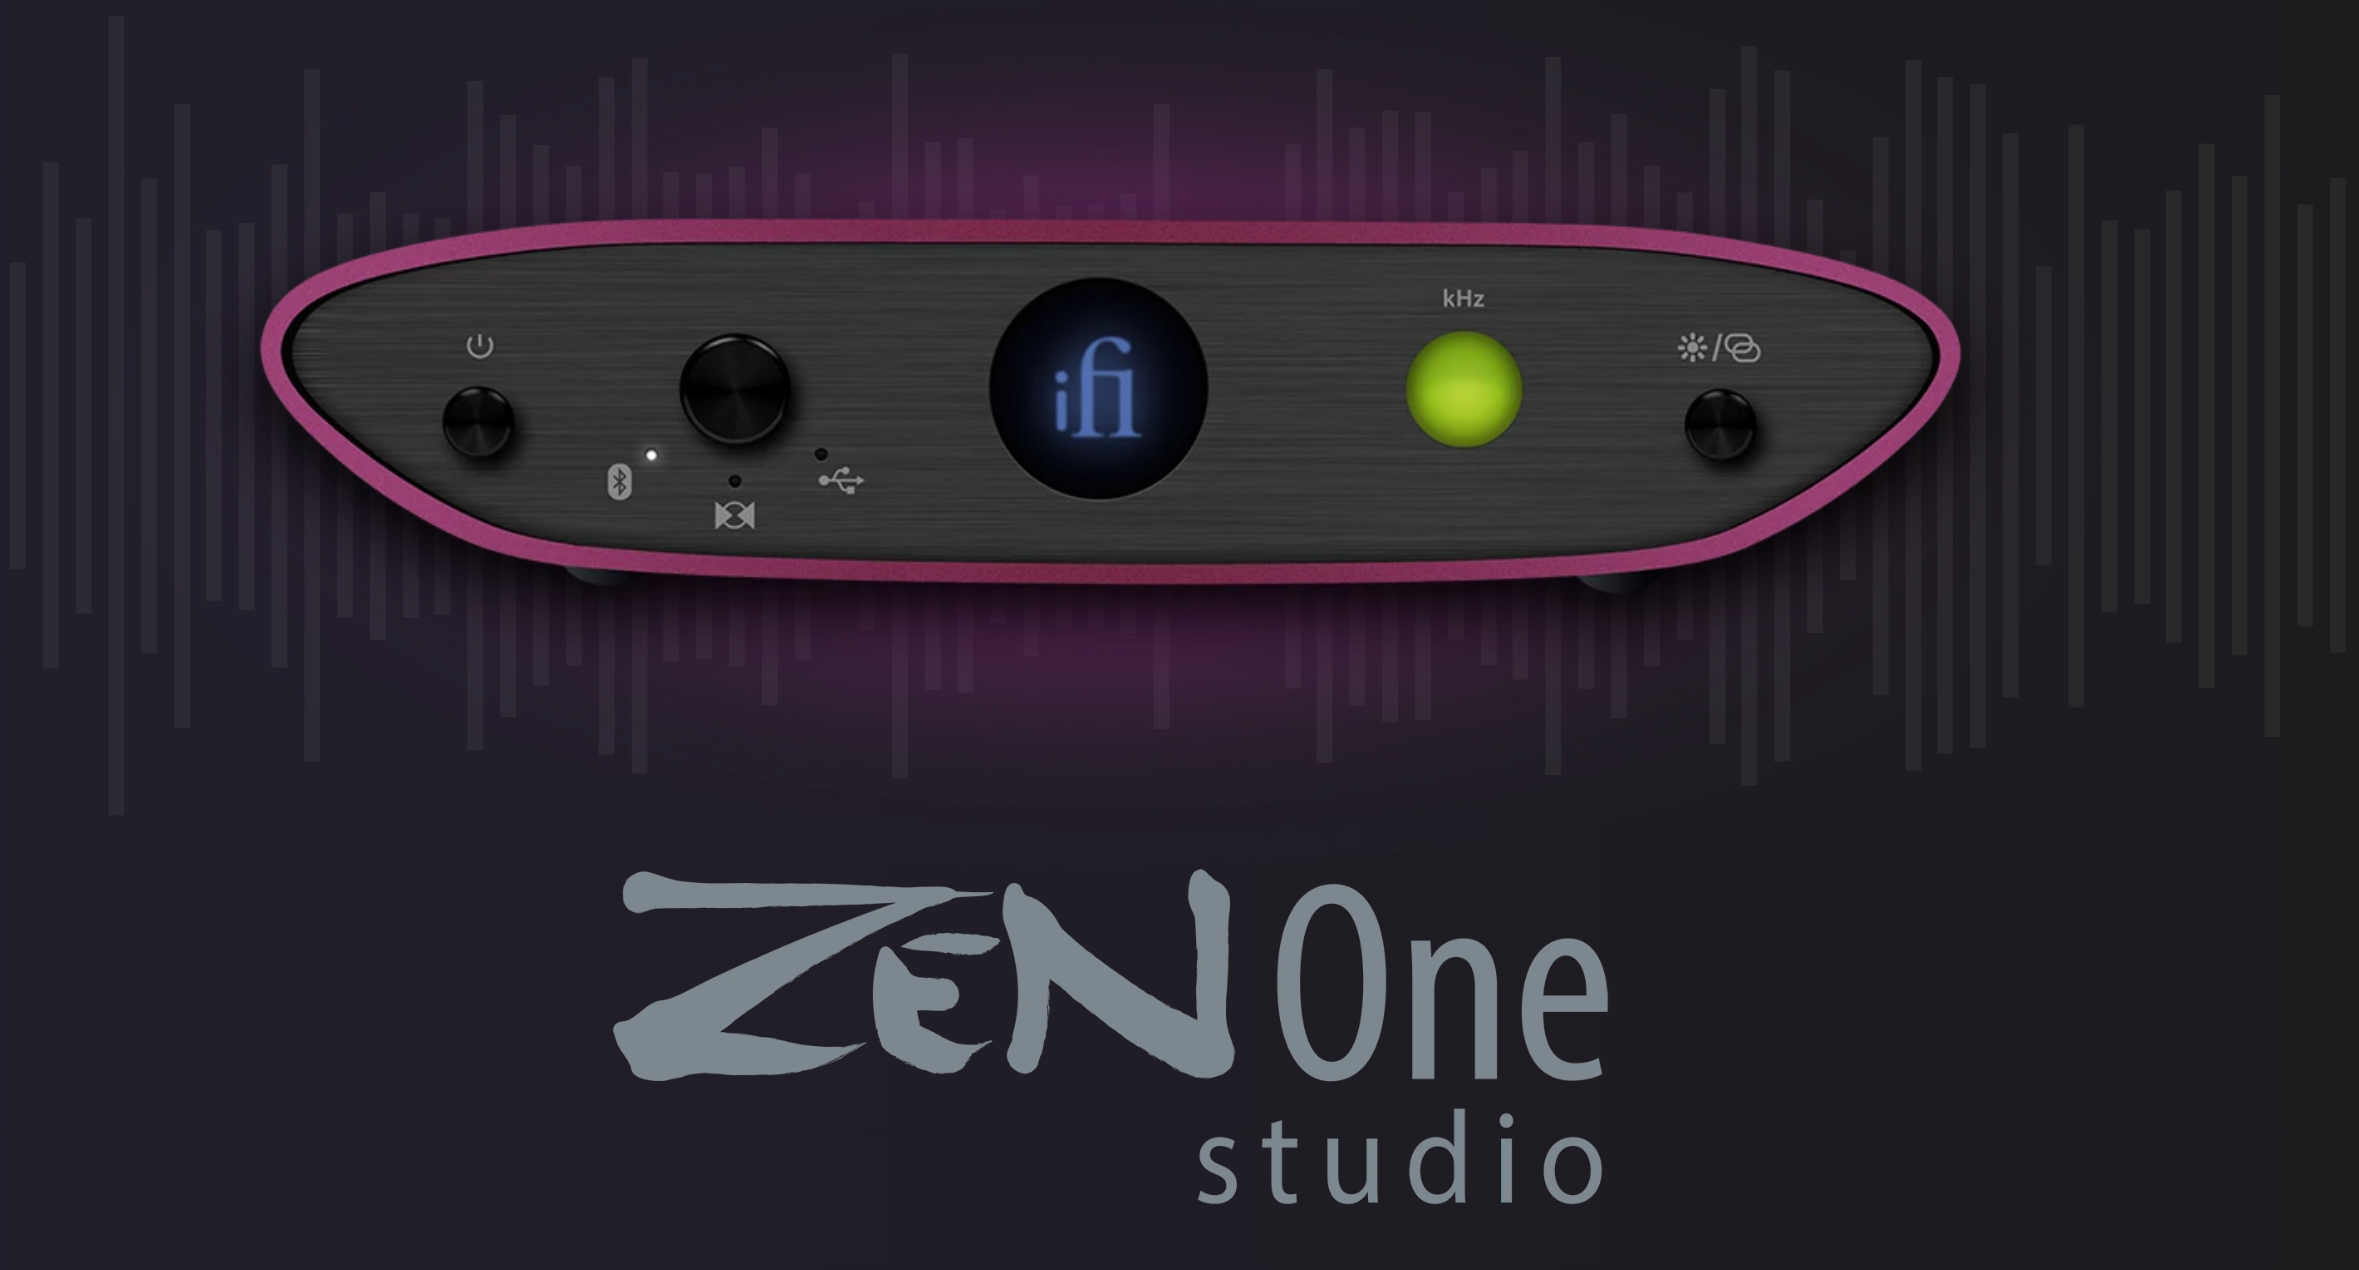 tinhte_ifi_zen_can_studio_zen_one_studio (2).png